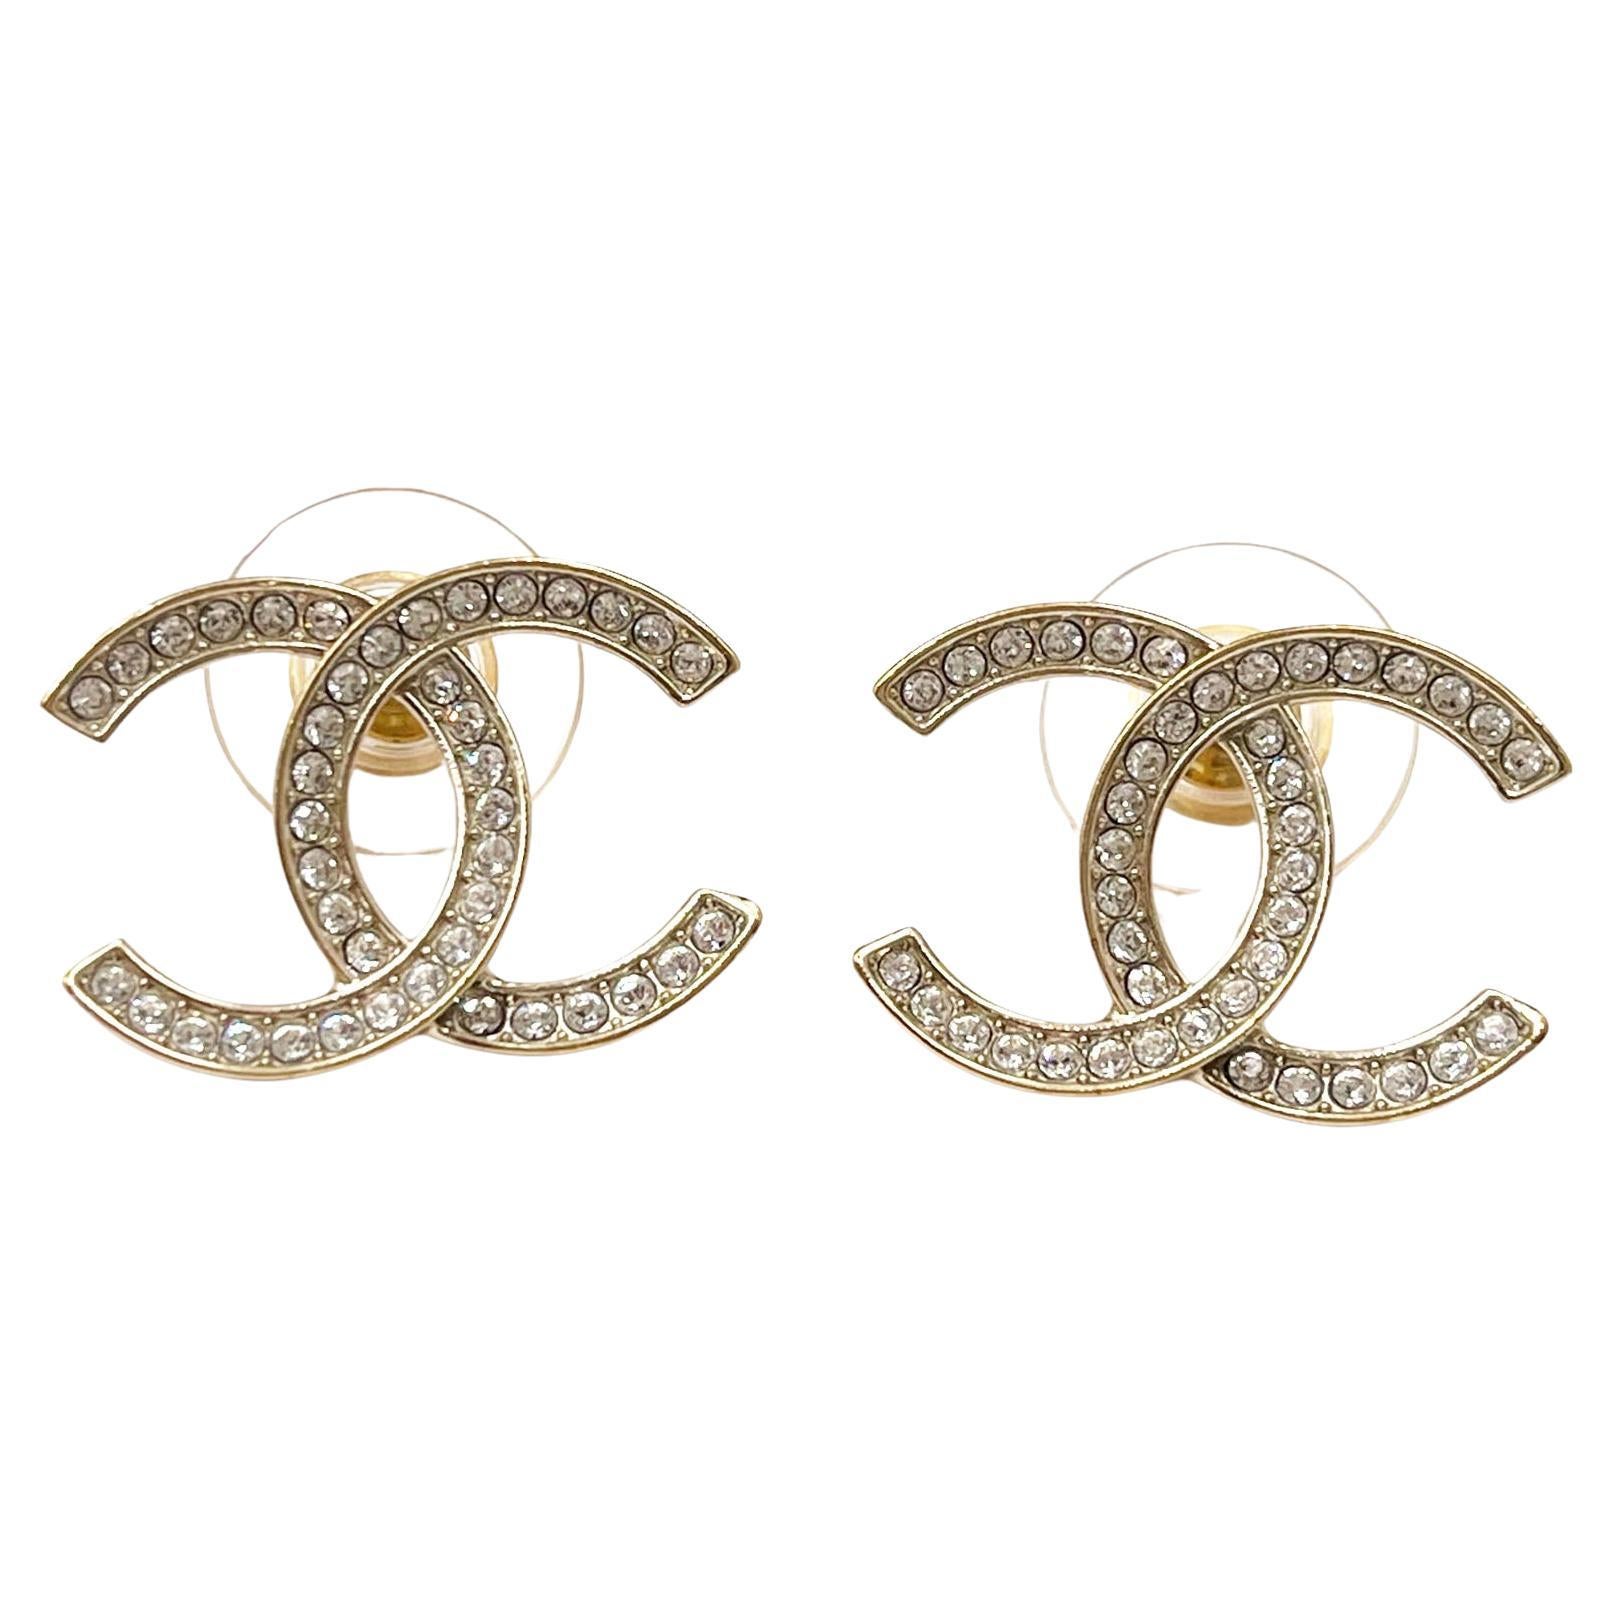 Chanel Earrings 21 - 16 For Sale on 1stDibs